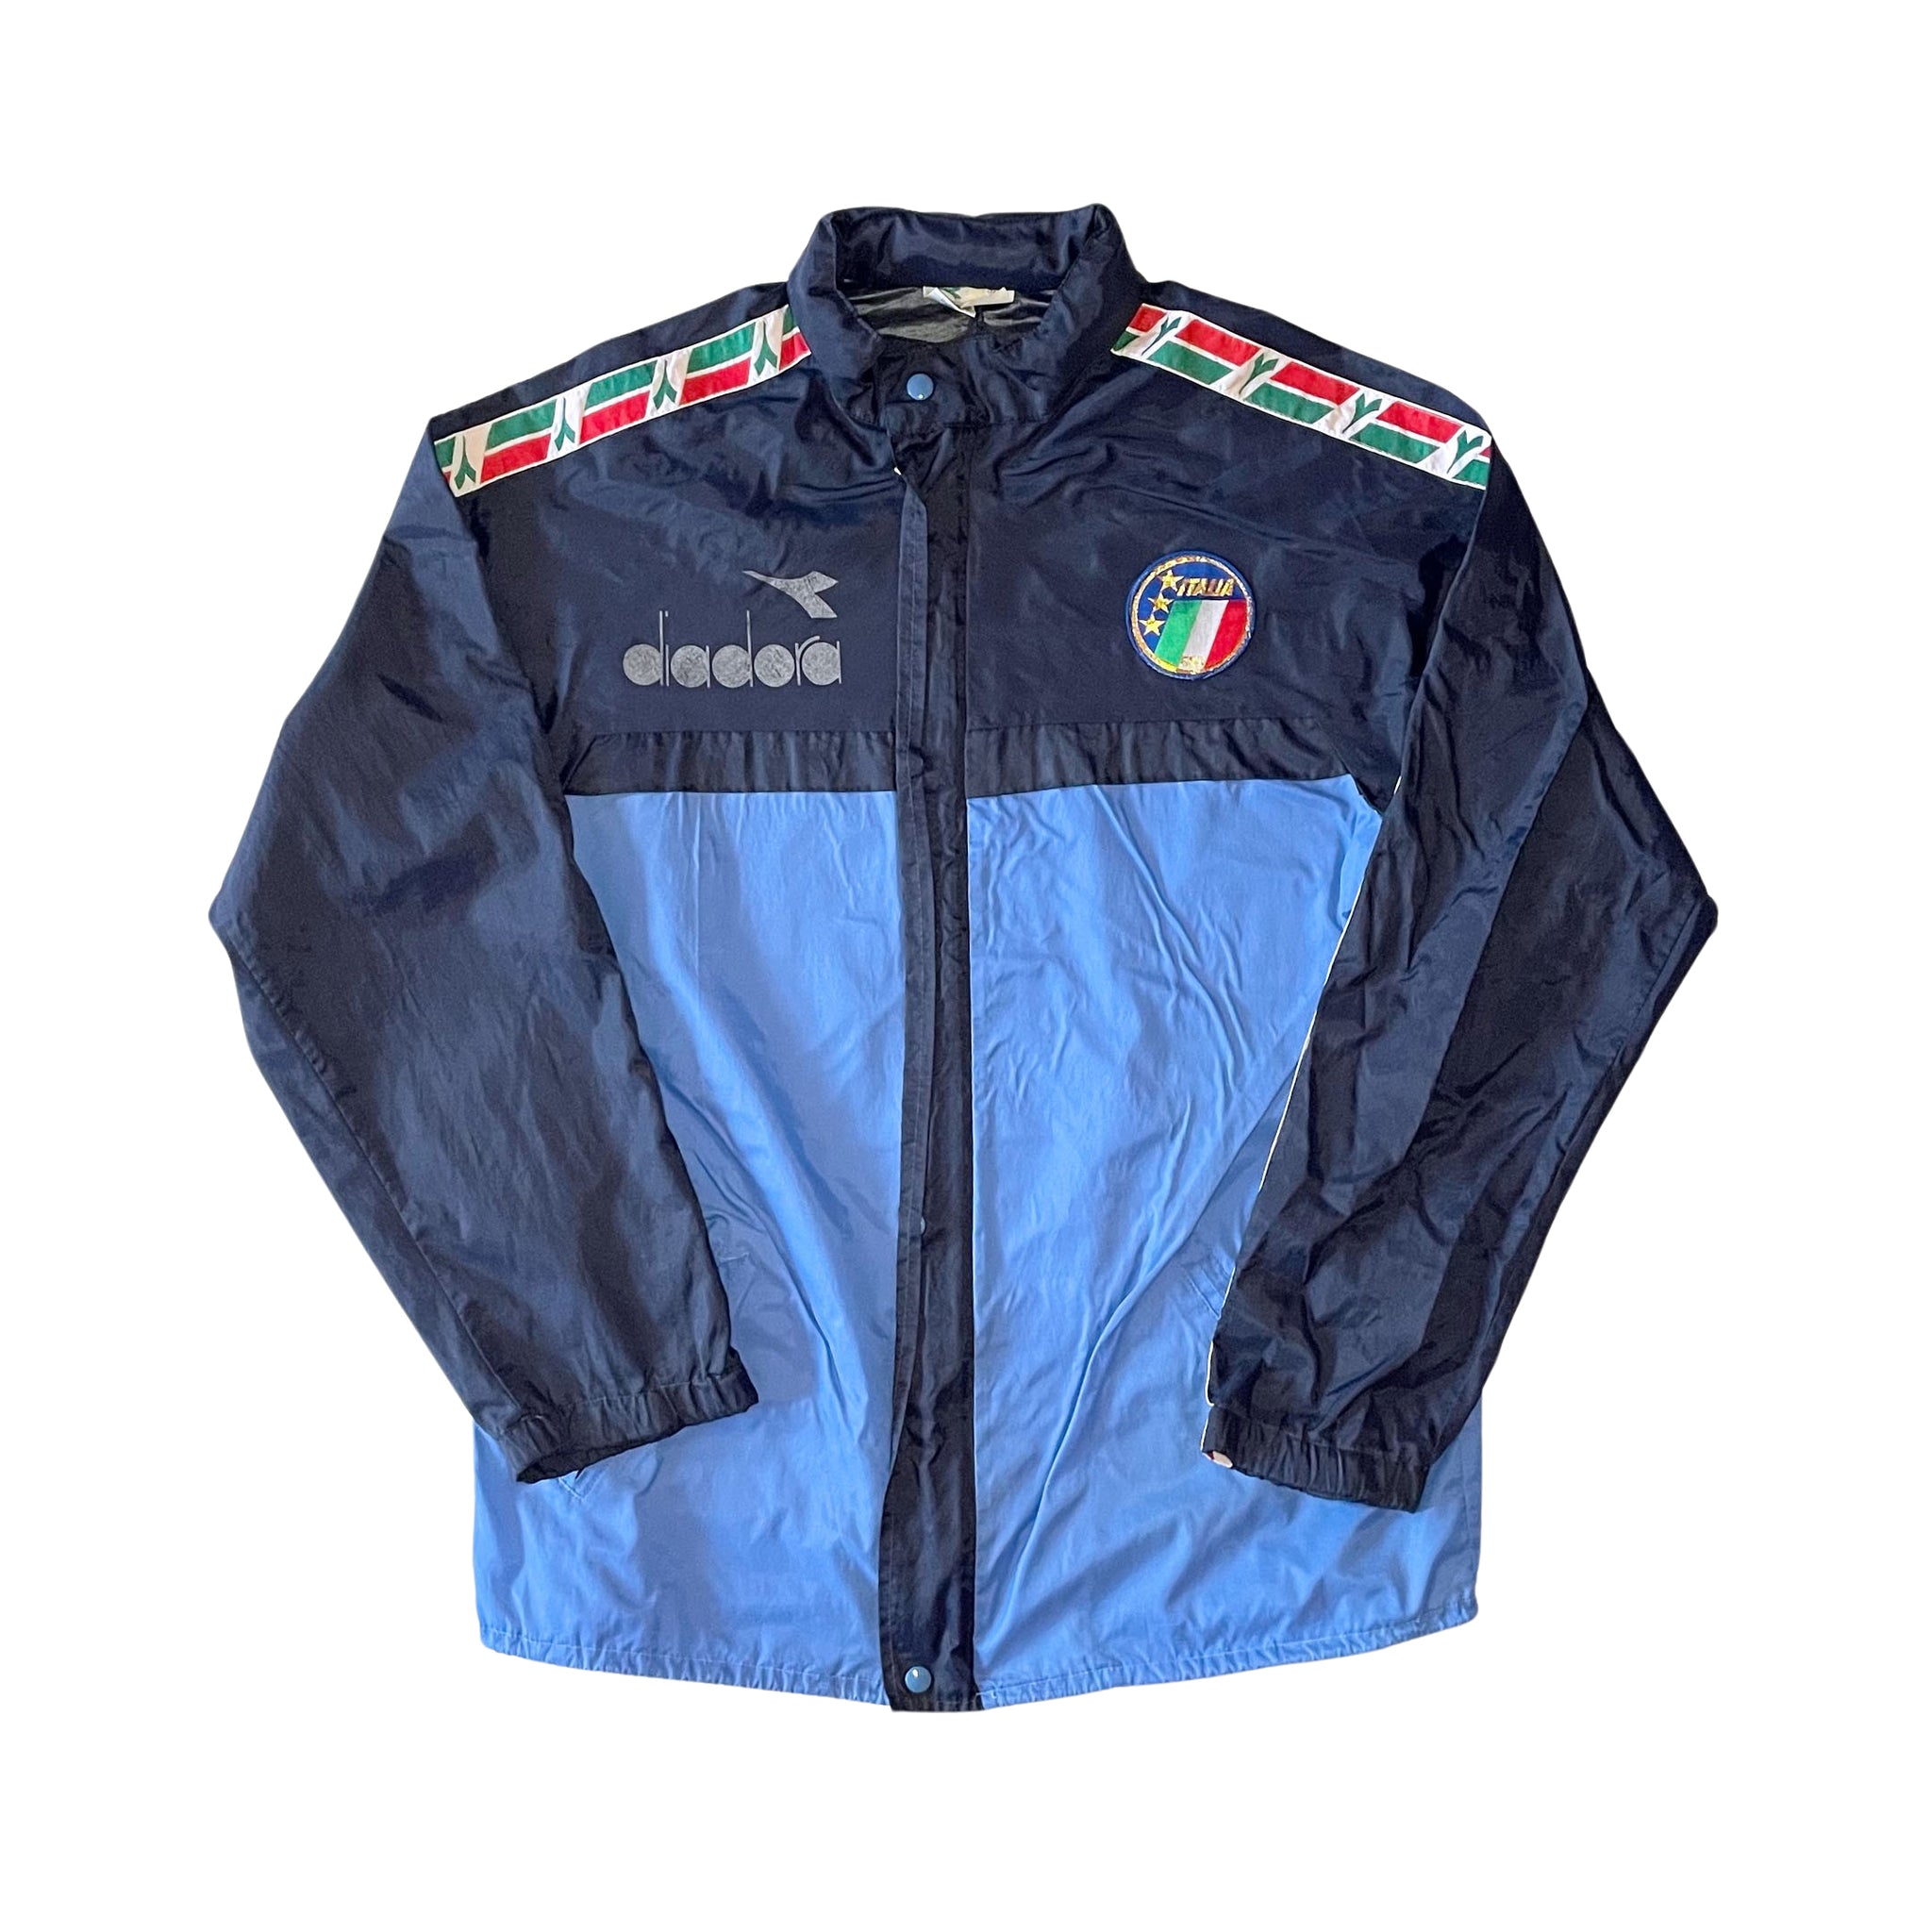 1990 Diadora Italy Rain Jacket - M/L